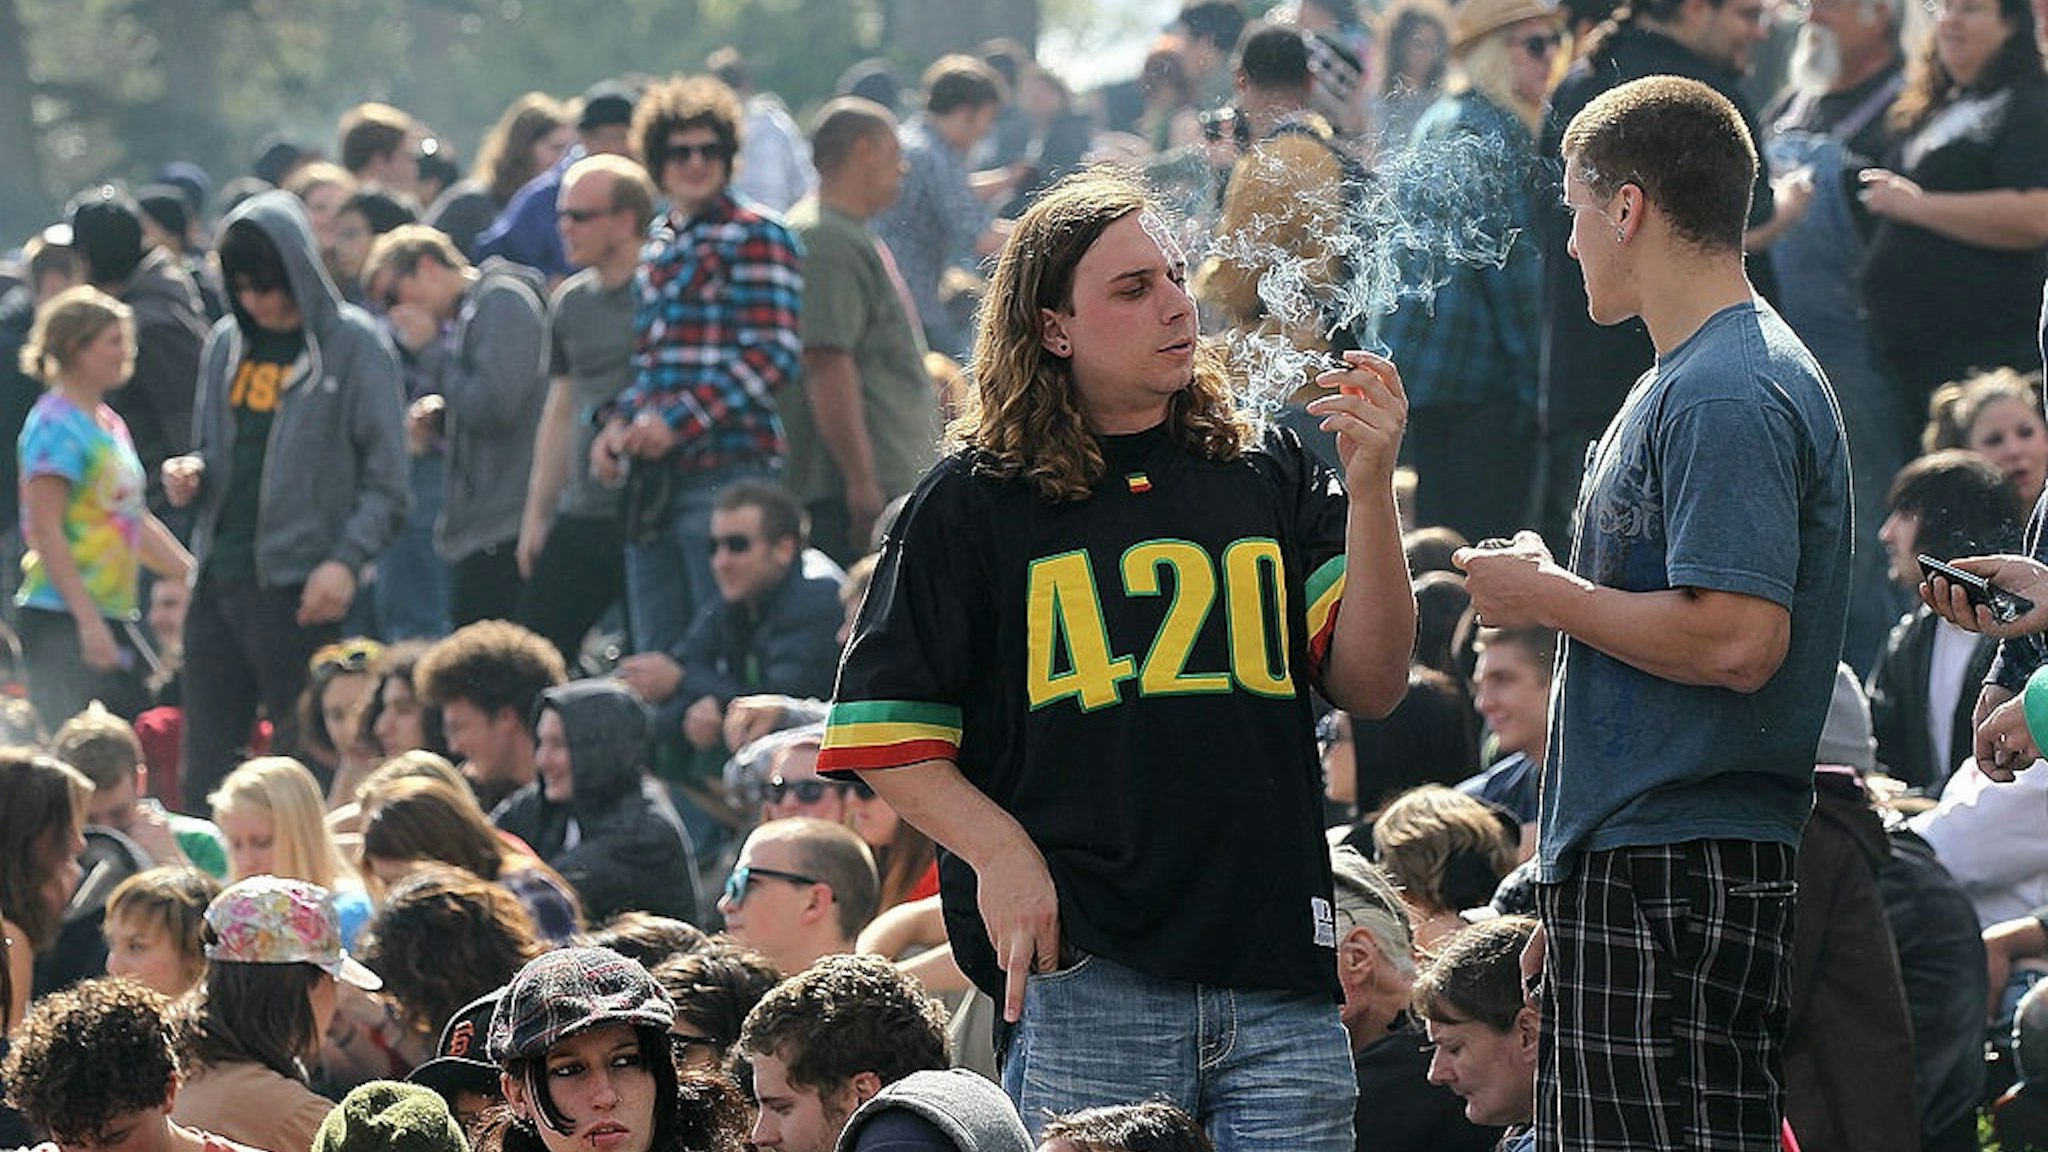 SAN FRANCISCO - APRIL 20: A marijuana user smokes marijuana during a 420 Day celebration on "Hippie Hill" in Golden Gate Park April 20, 2010 in San Francisco, California.